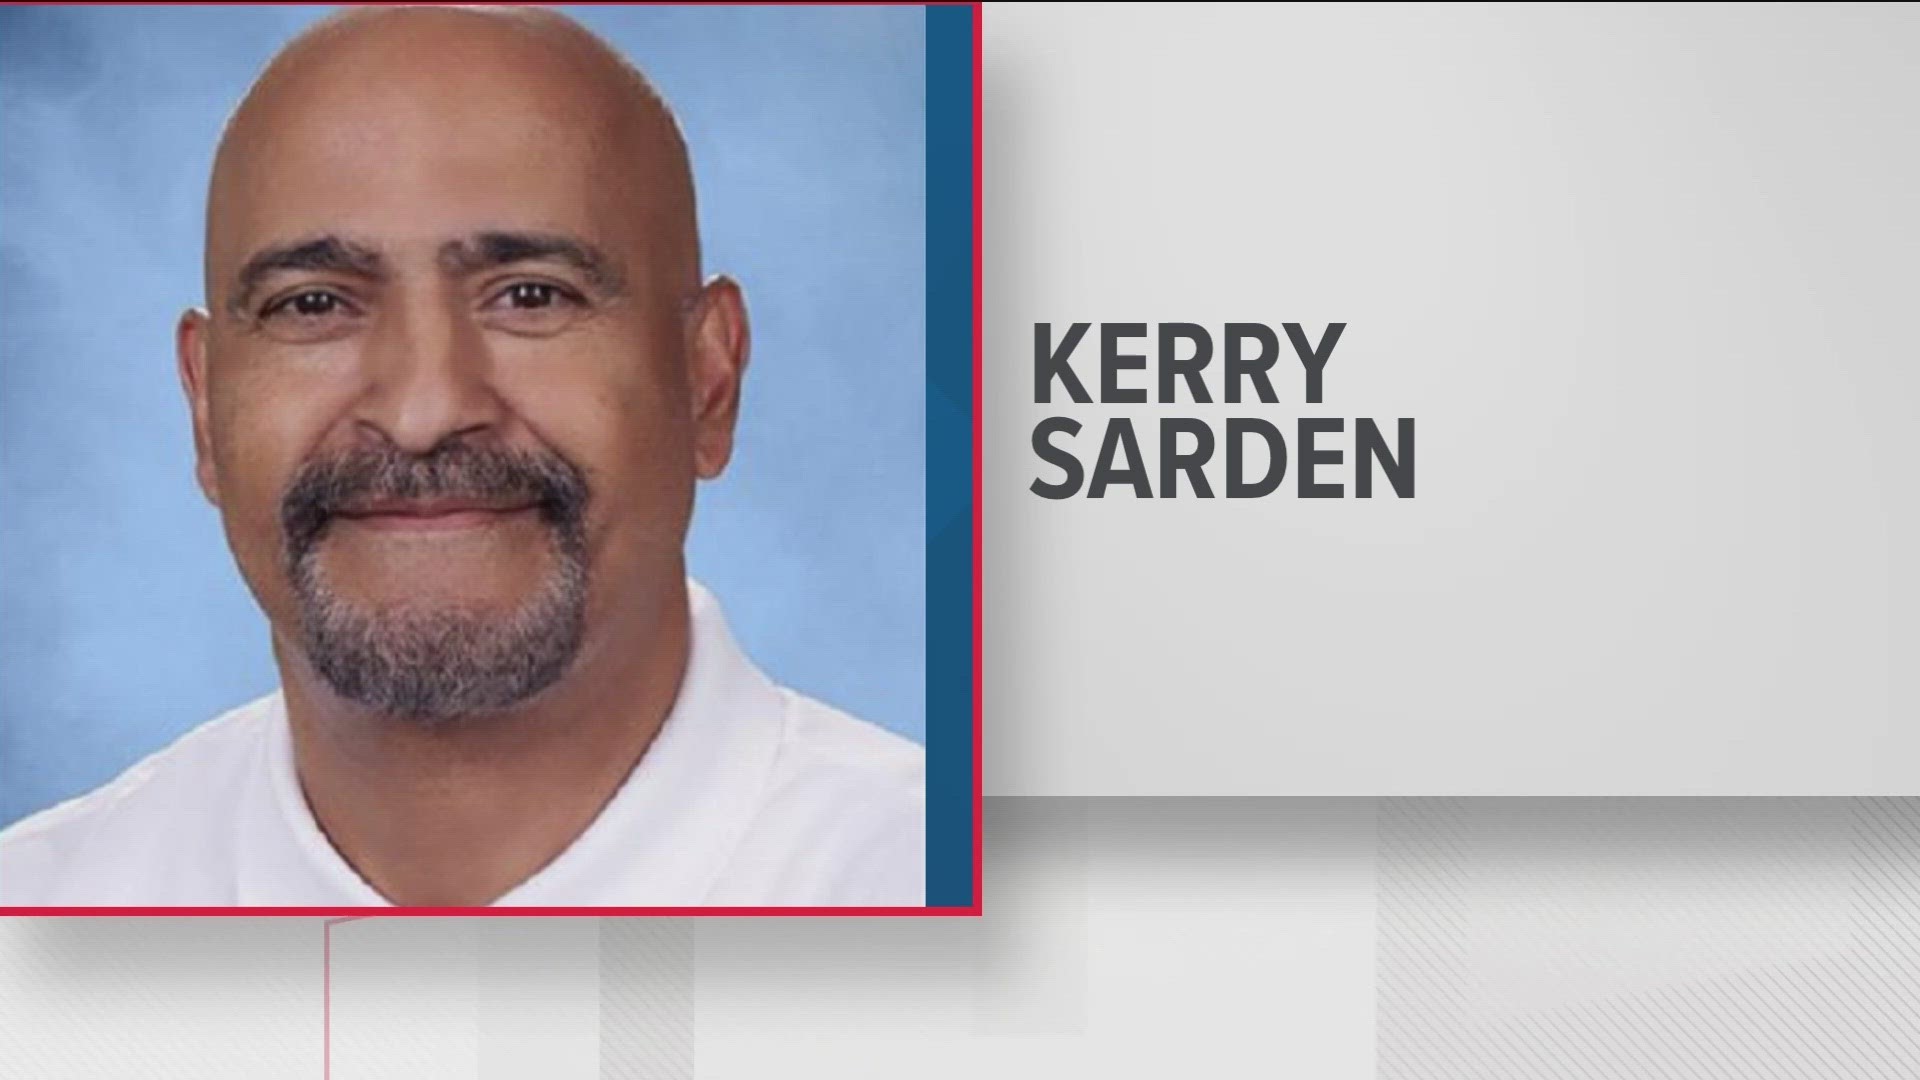 Kerry Sarden, head coach for the boys' varsity basketball team and golf coach, died unexpectedly, North Atlanta High Principal Curtis Douglass said on Tuesday.